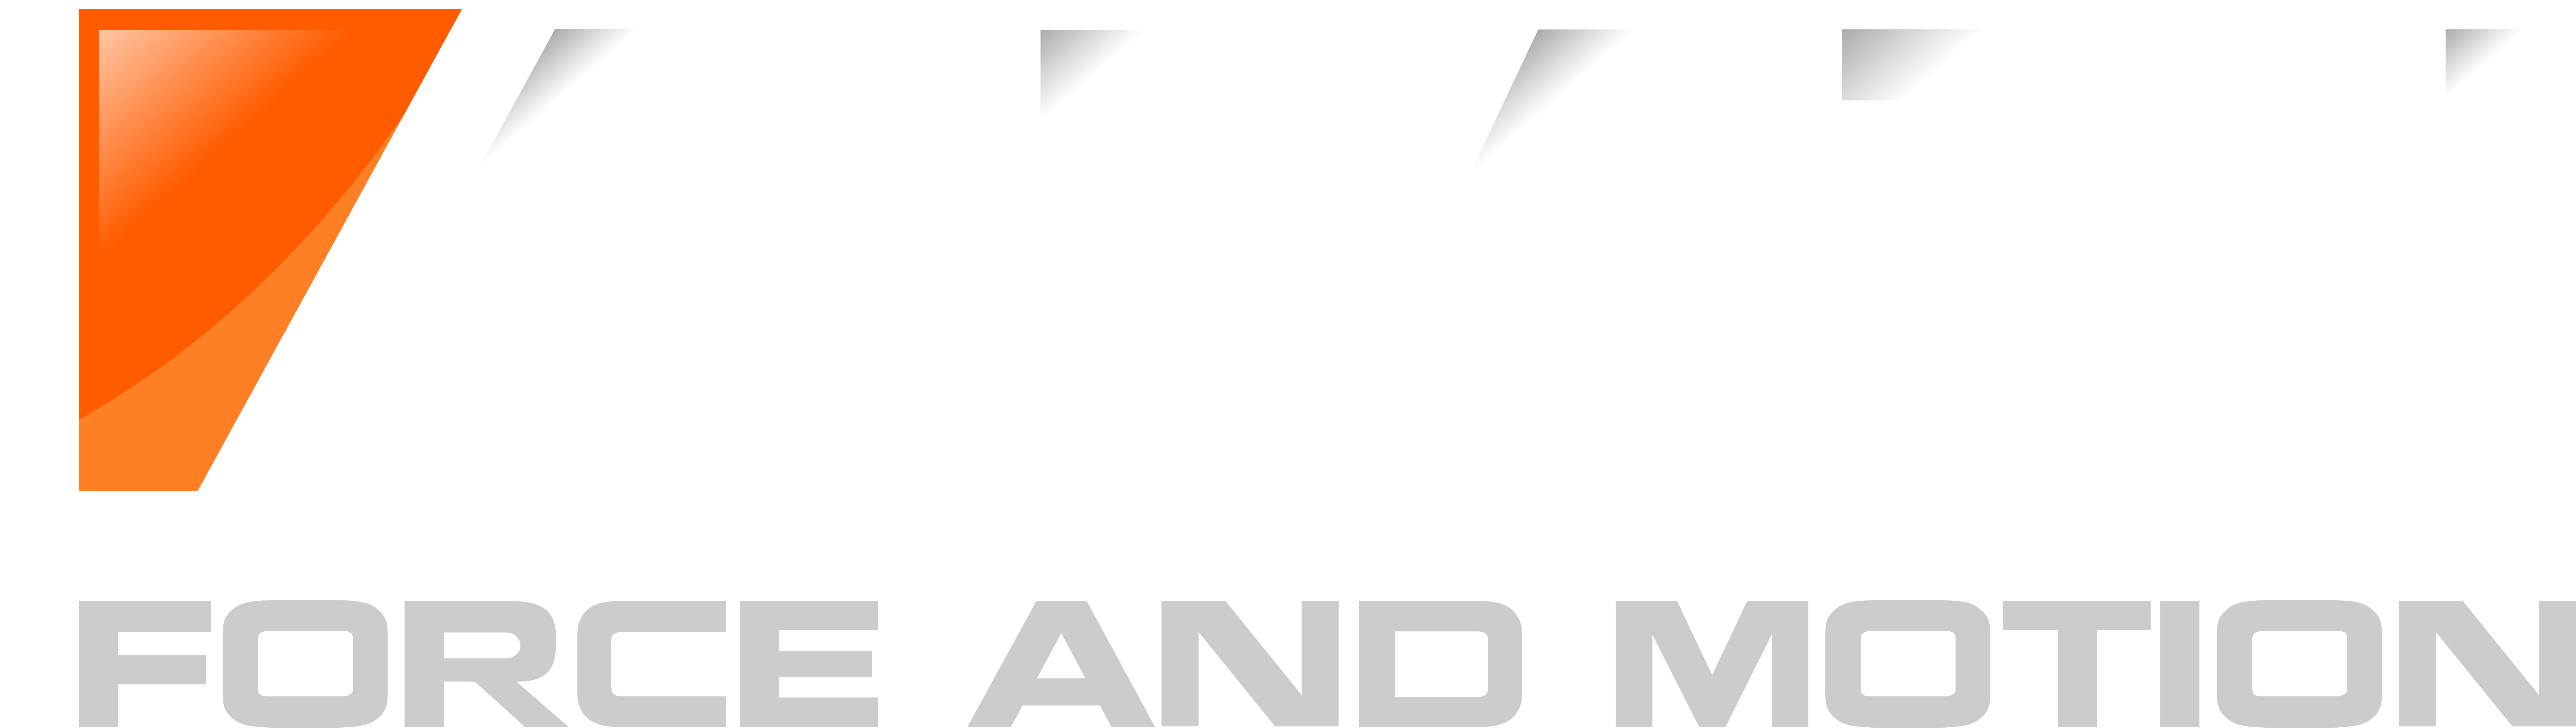 AMTI logo - white letters